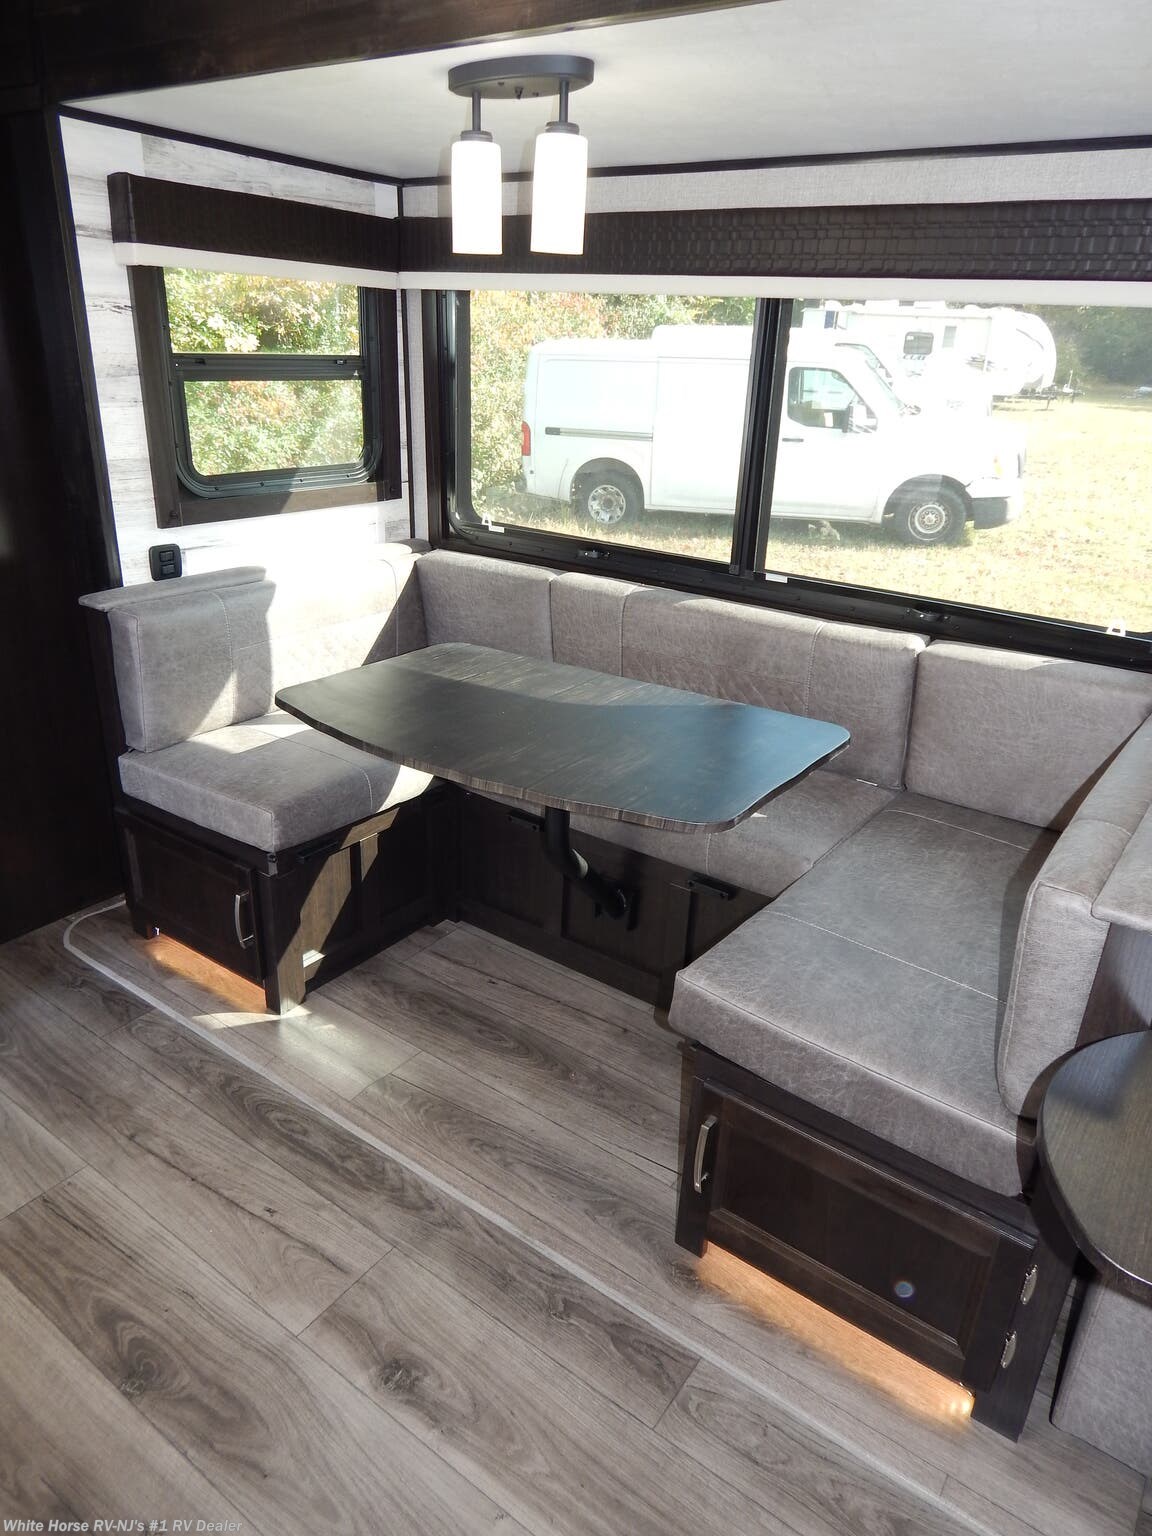 jayco travel trailer dinette table